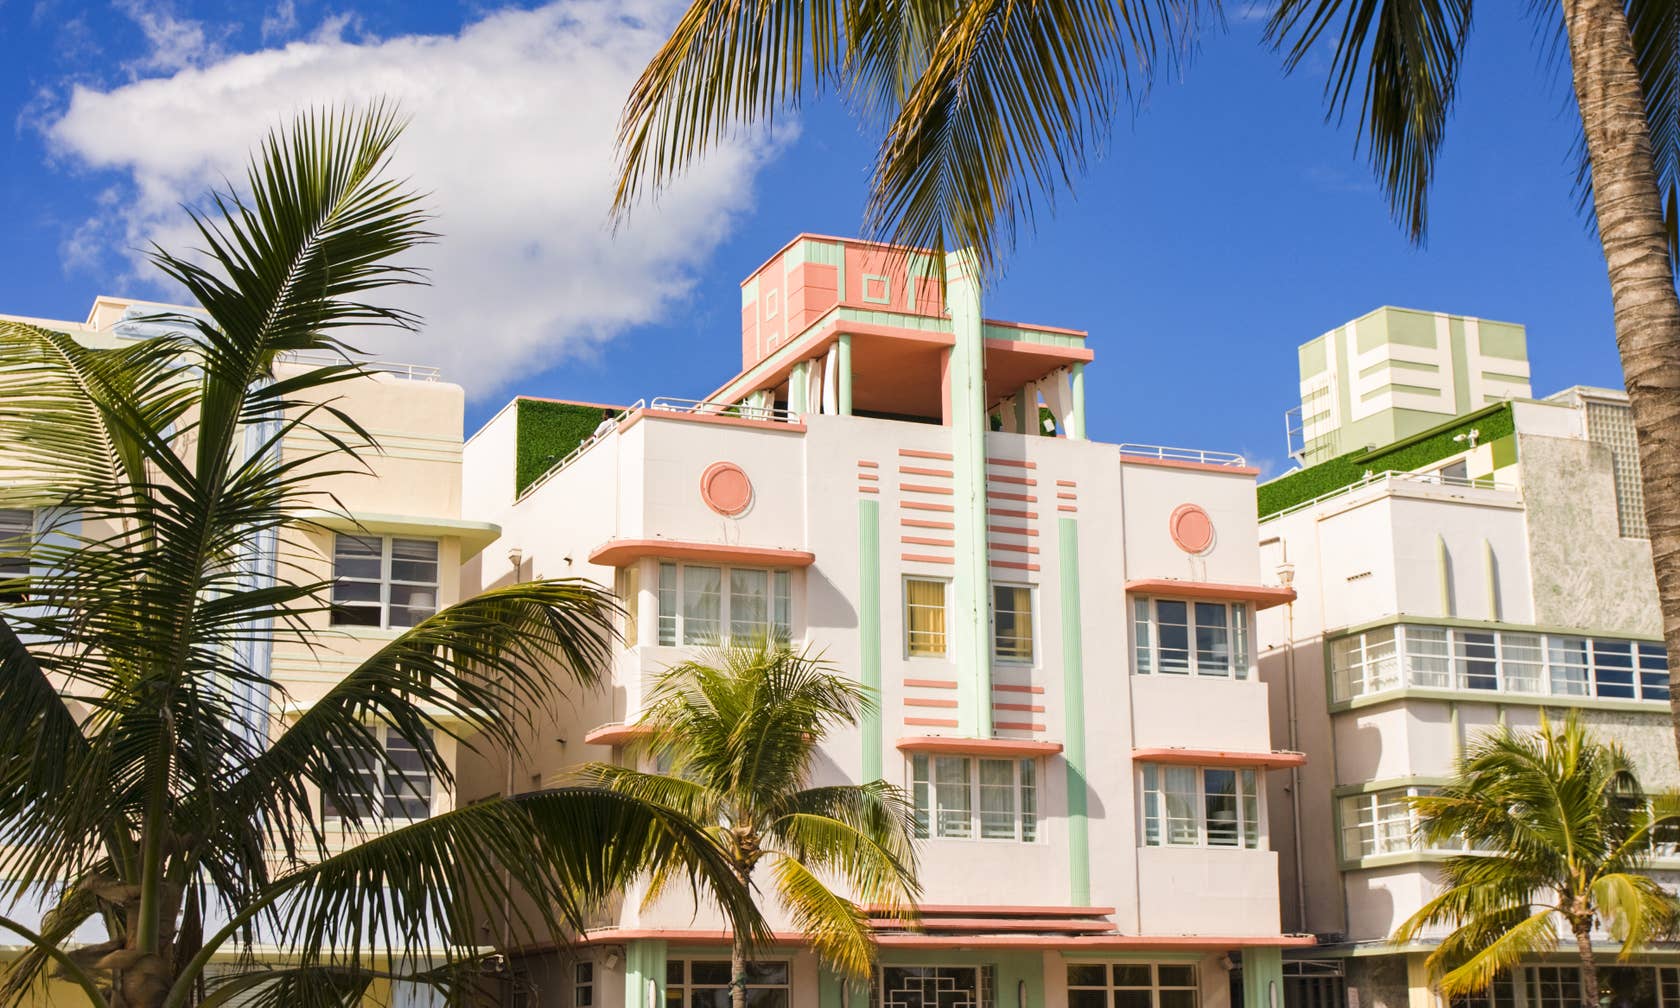 South Beach, Miami Beach : locations saisonnières